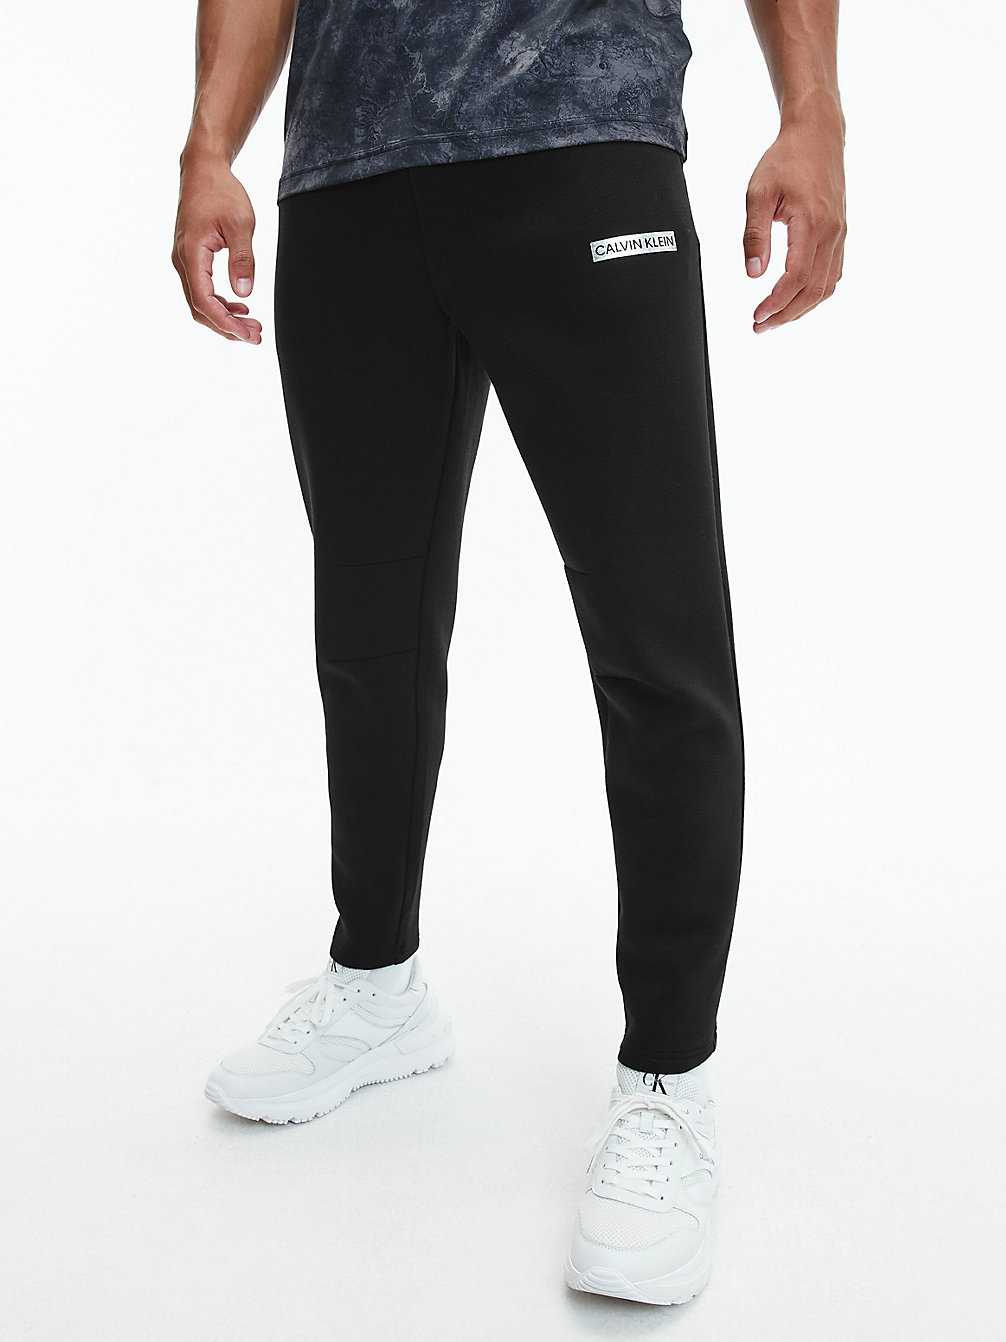 CK BLACK/BLACKENED PEARL Pantalon De Jogging Fuselé undefined hommes Calvin Klein